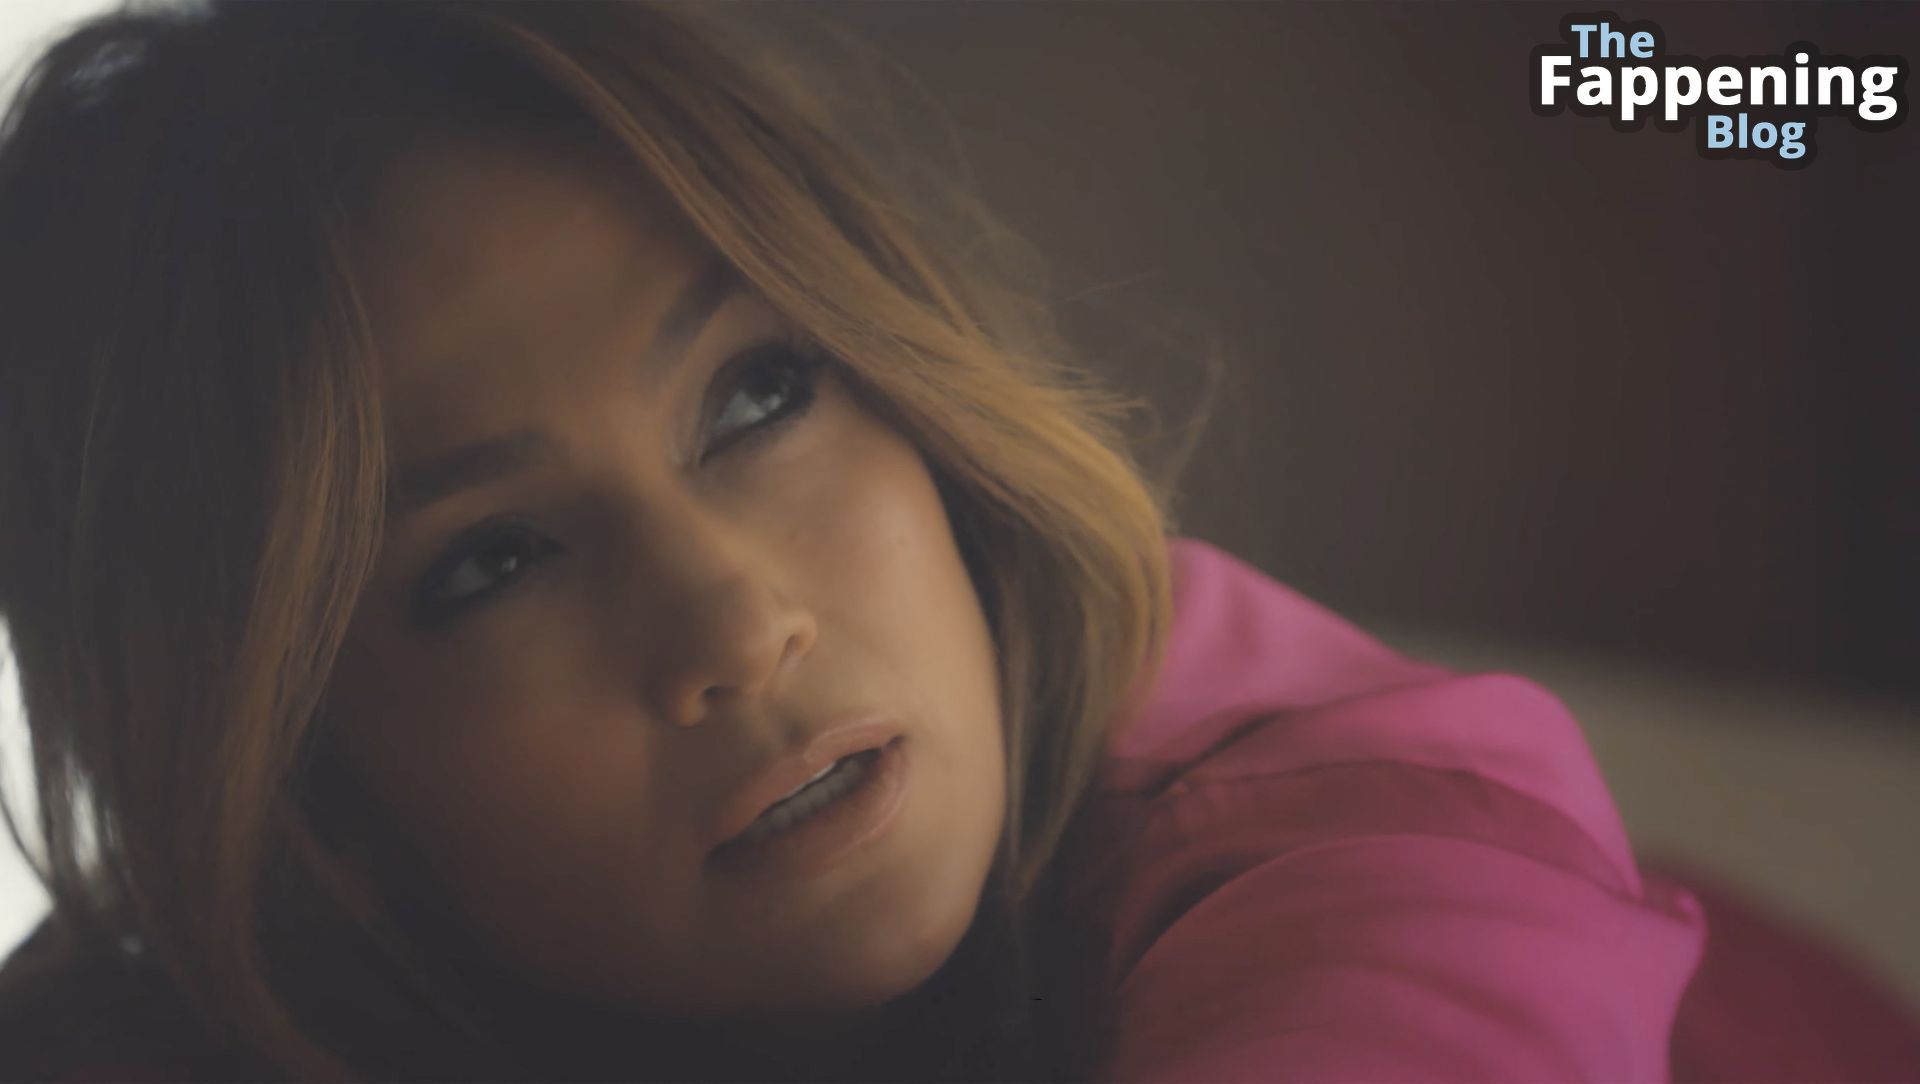 Jennifer-Lopez-Sexy-The-Fappening-Blog-11-1.jpg